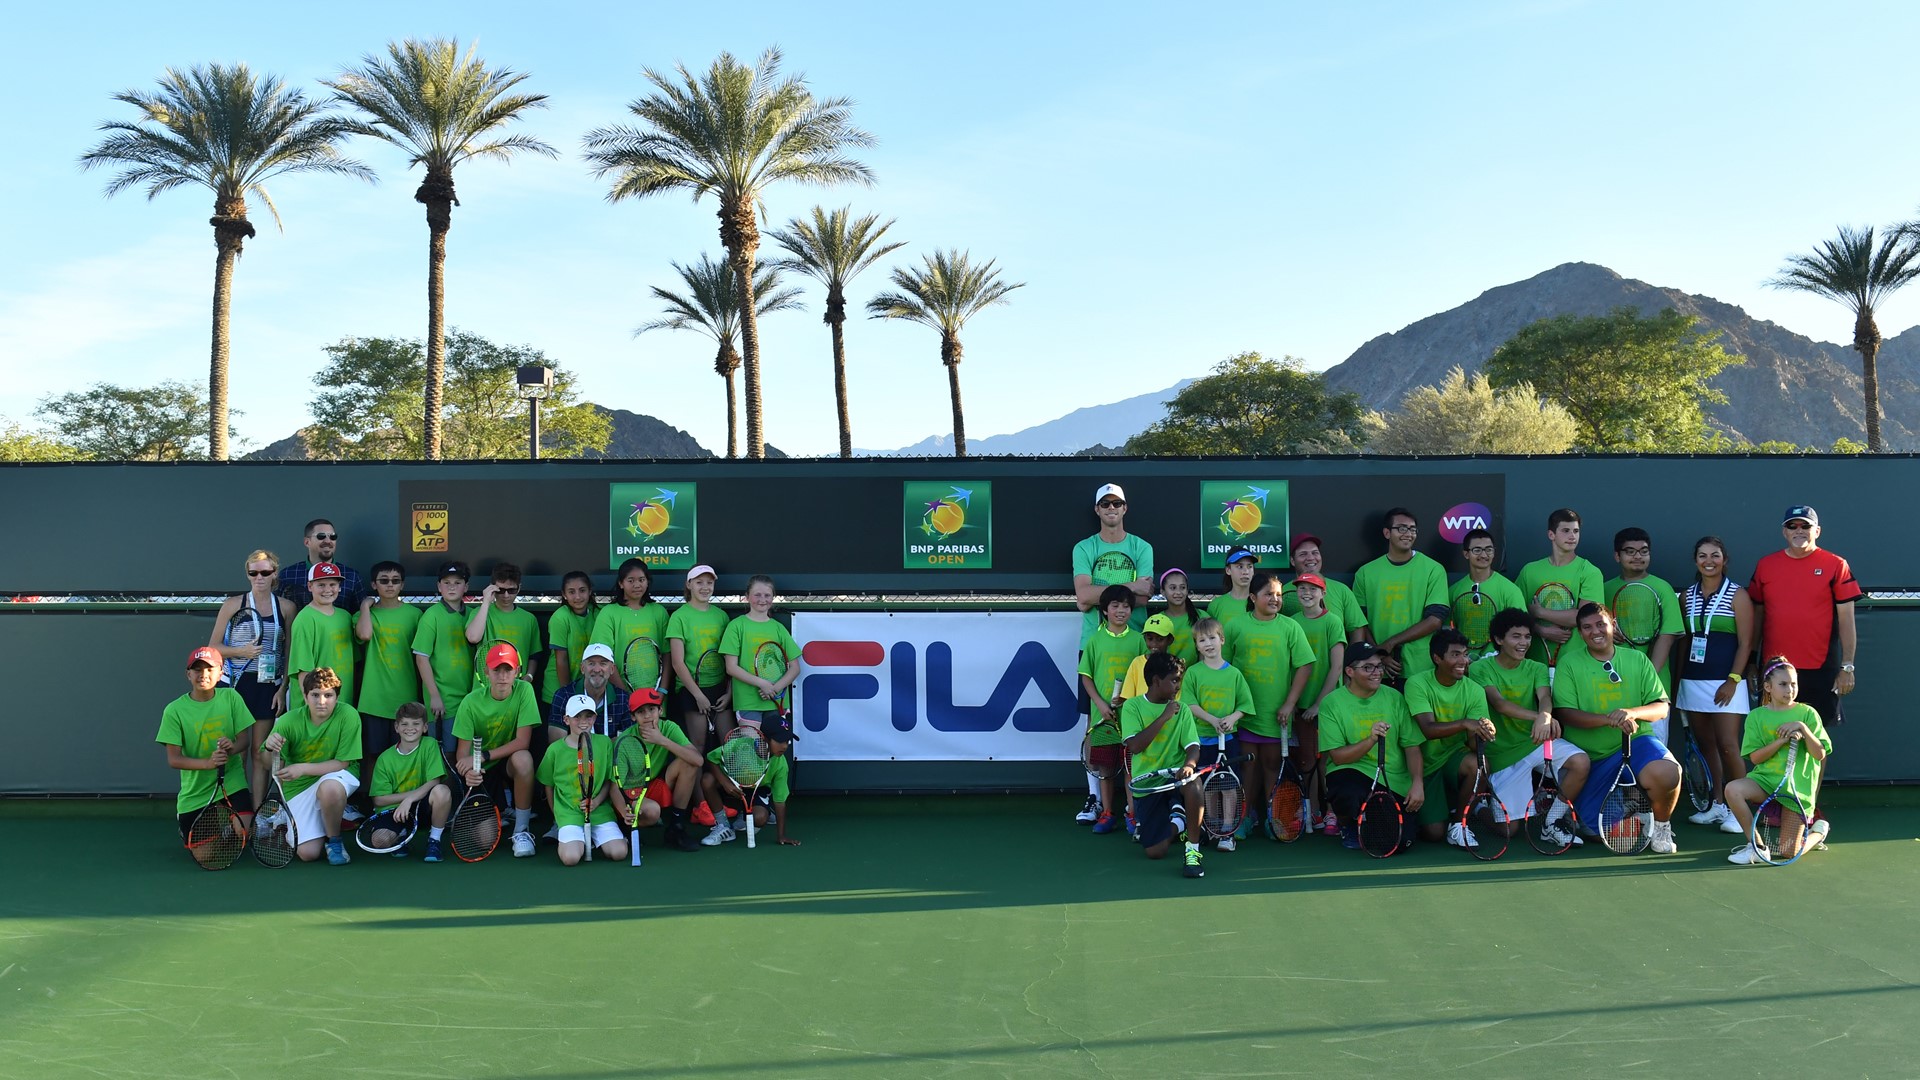 FILA Hosts Junior Tennis Clinic with Sam Querrey at the BNP Paribas Open